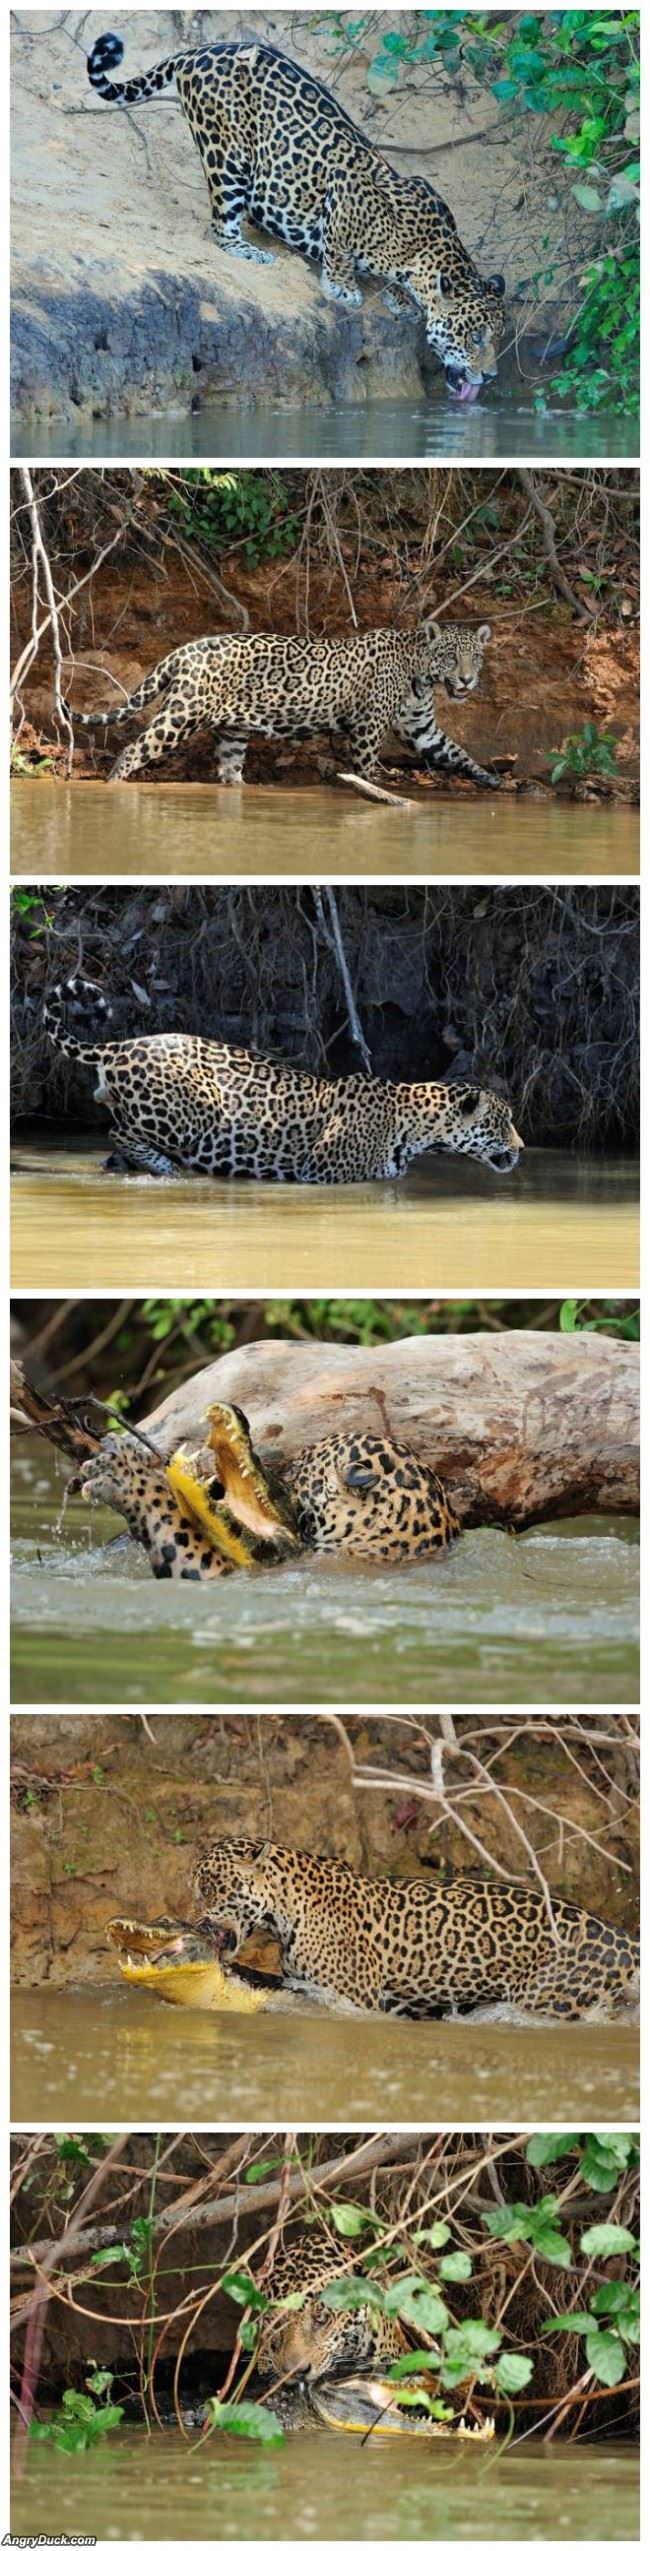 Jaguar Vs Crocodile